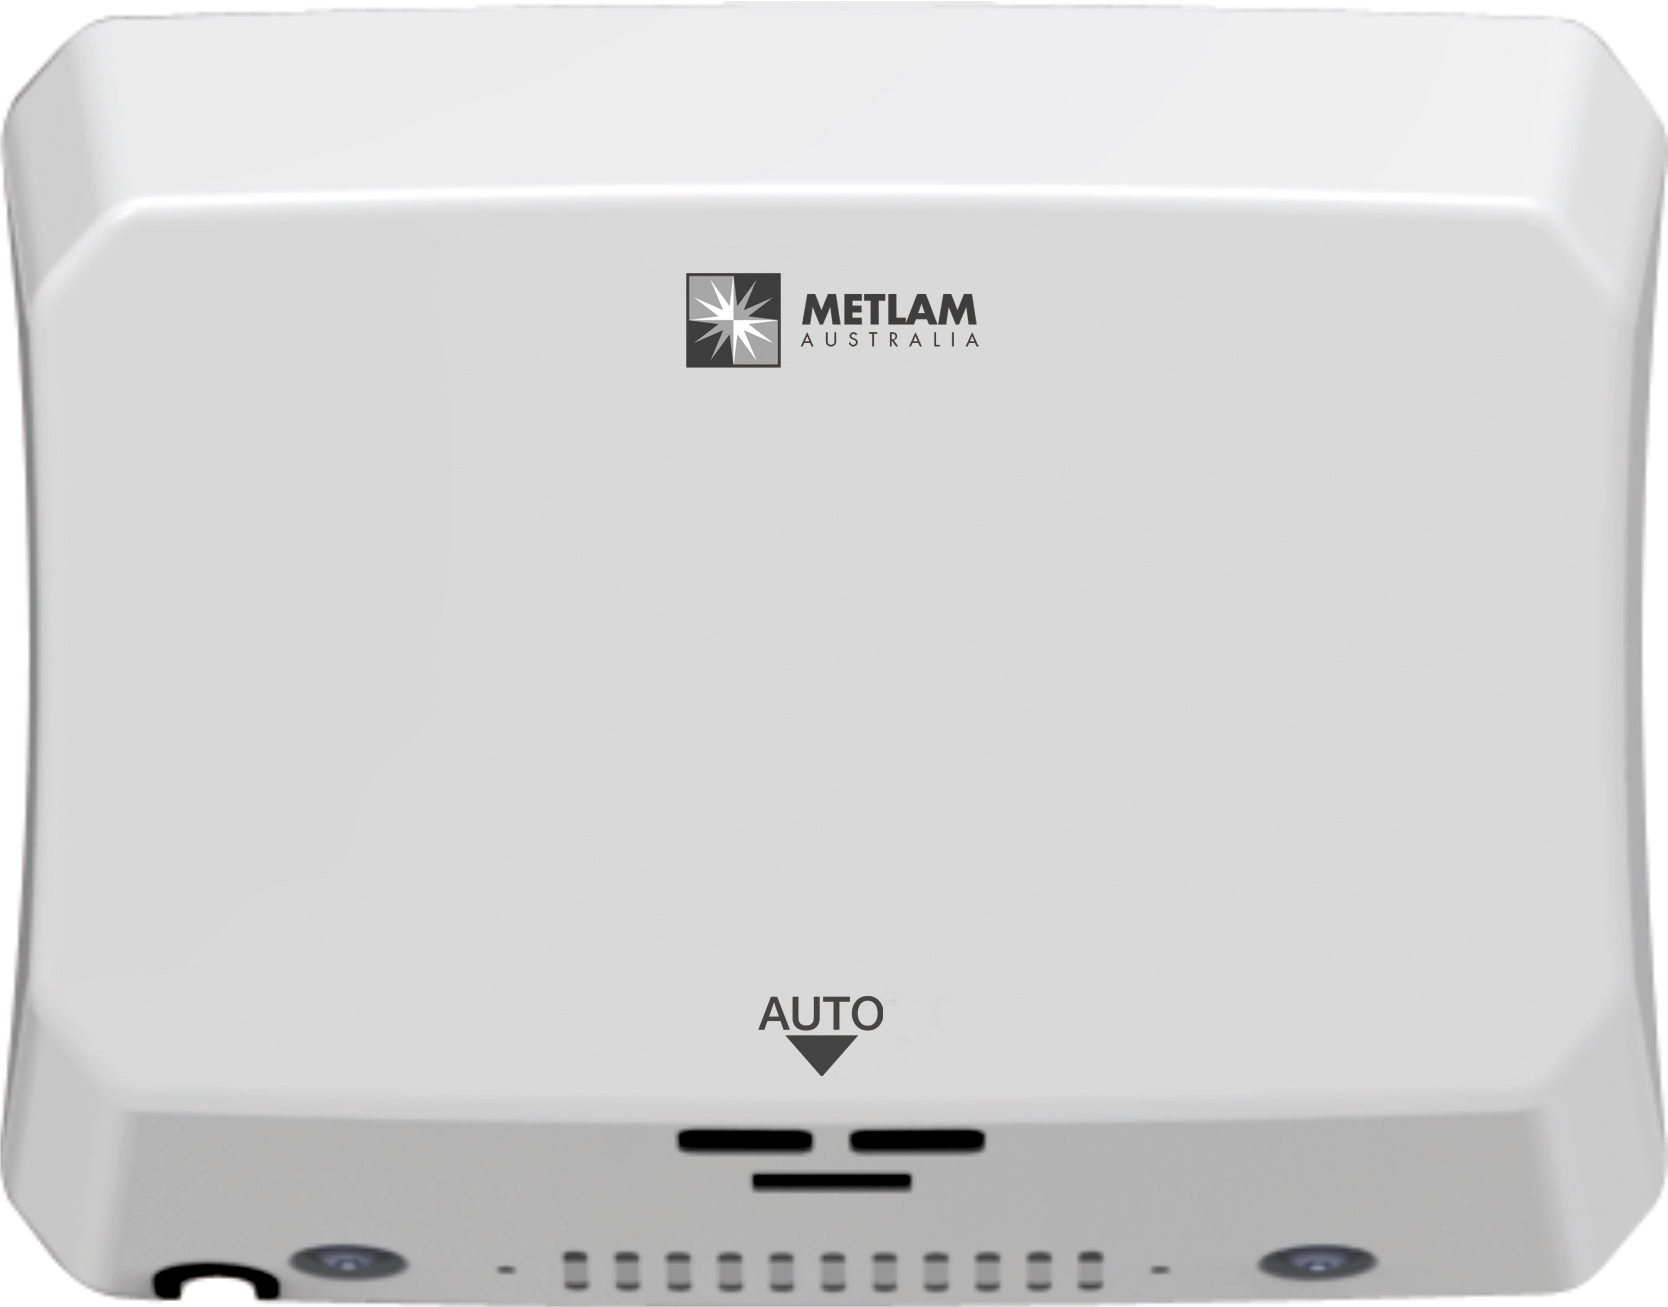 Metlam Slimline Eco Auto Operation Hand Dryer